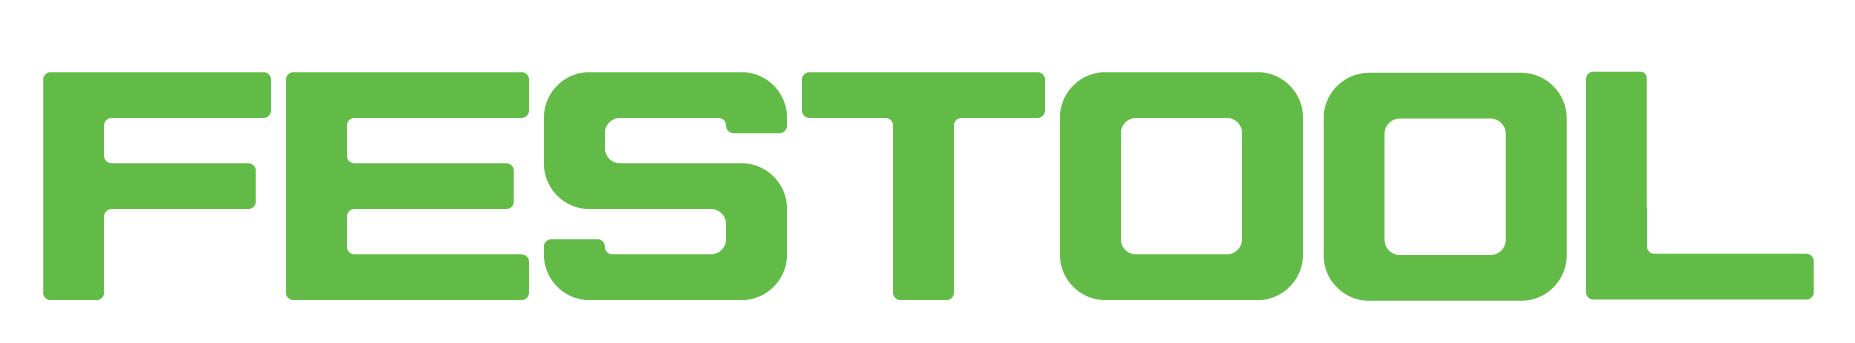 Festool logo